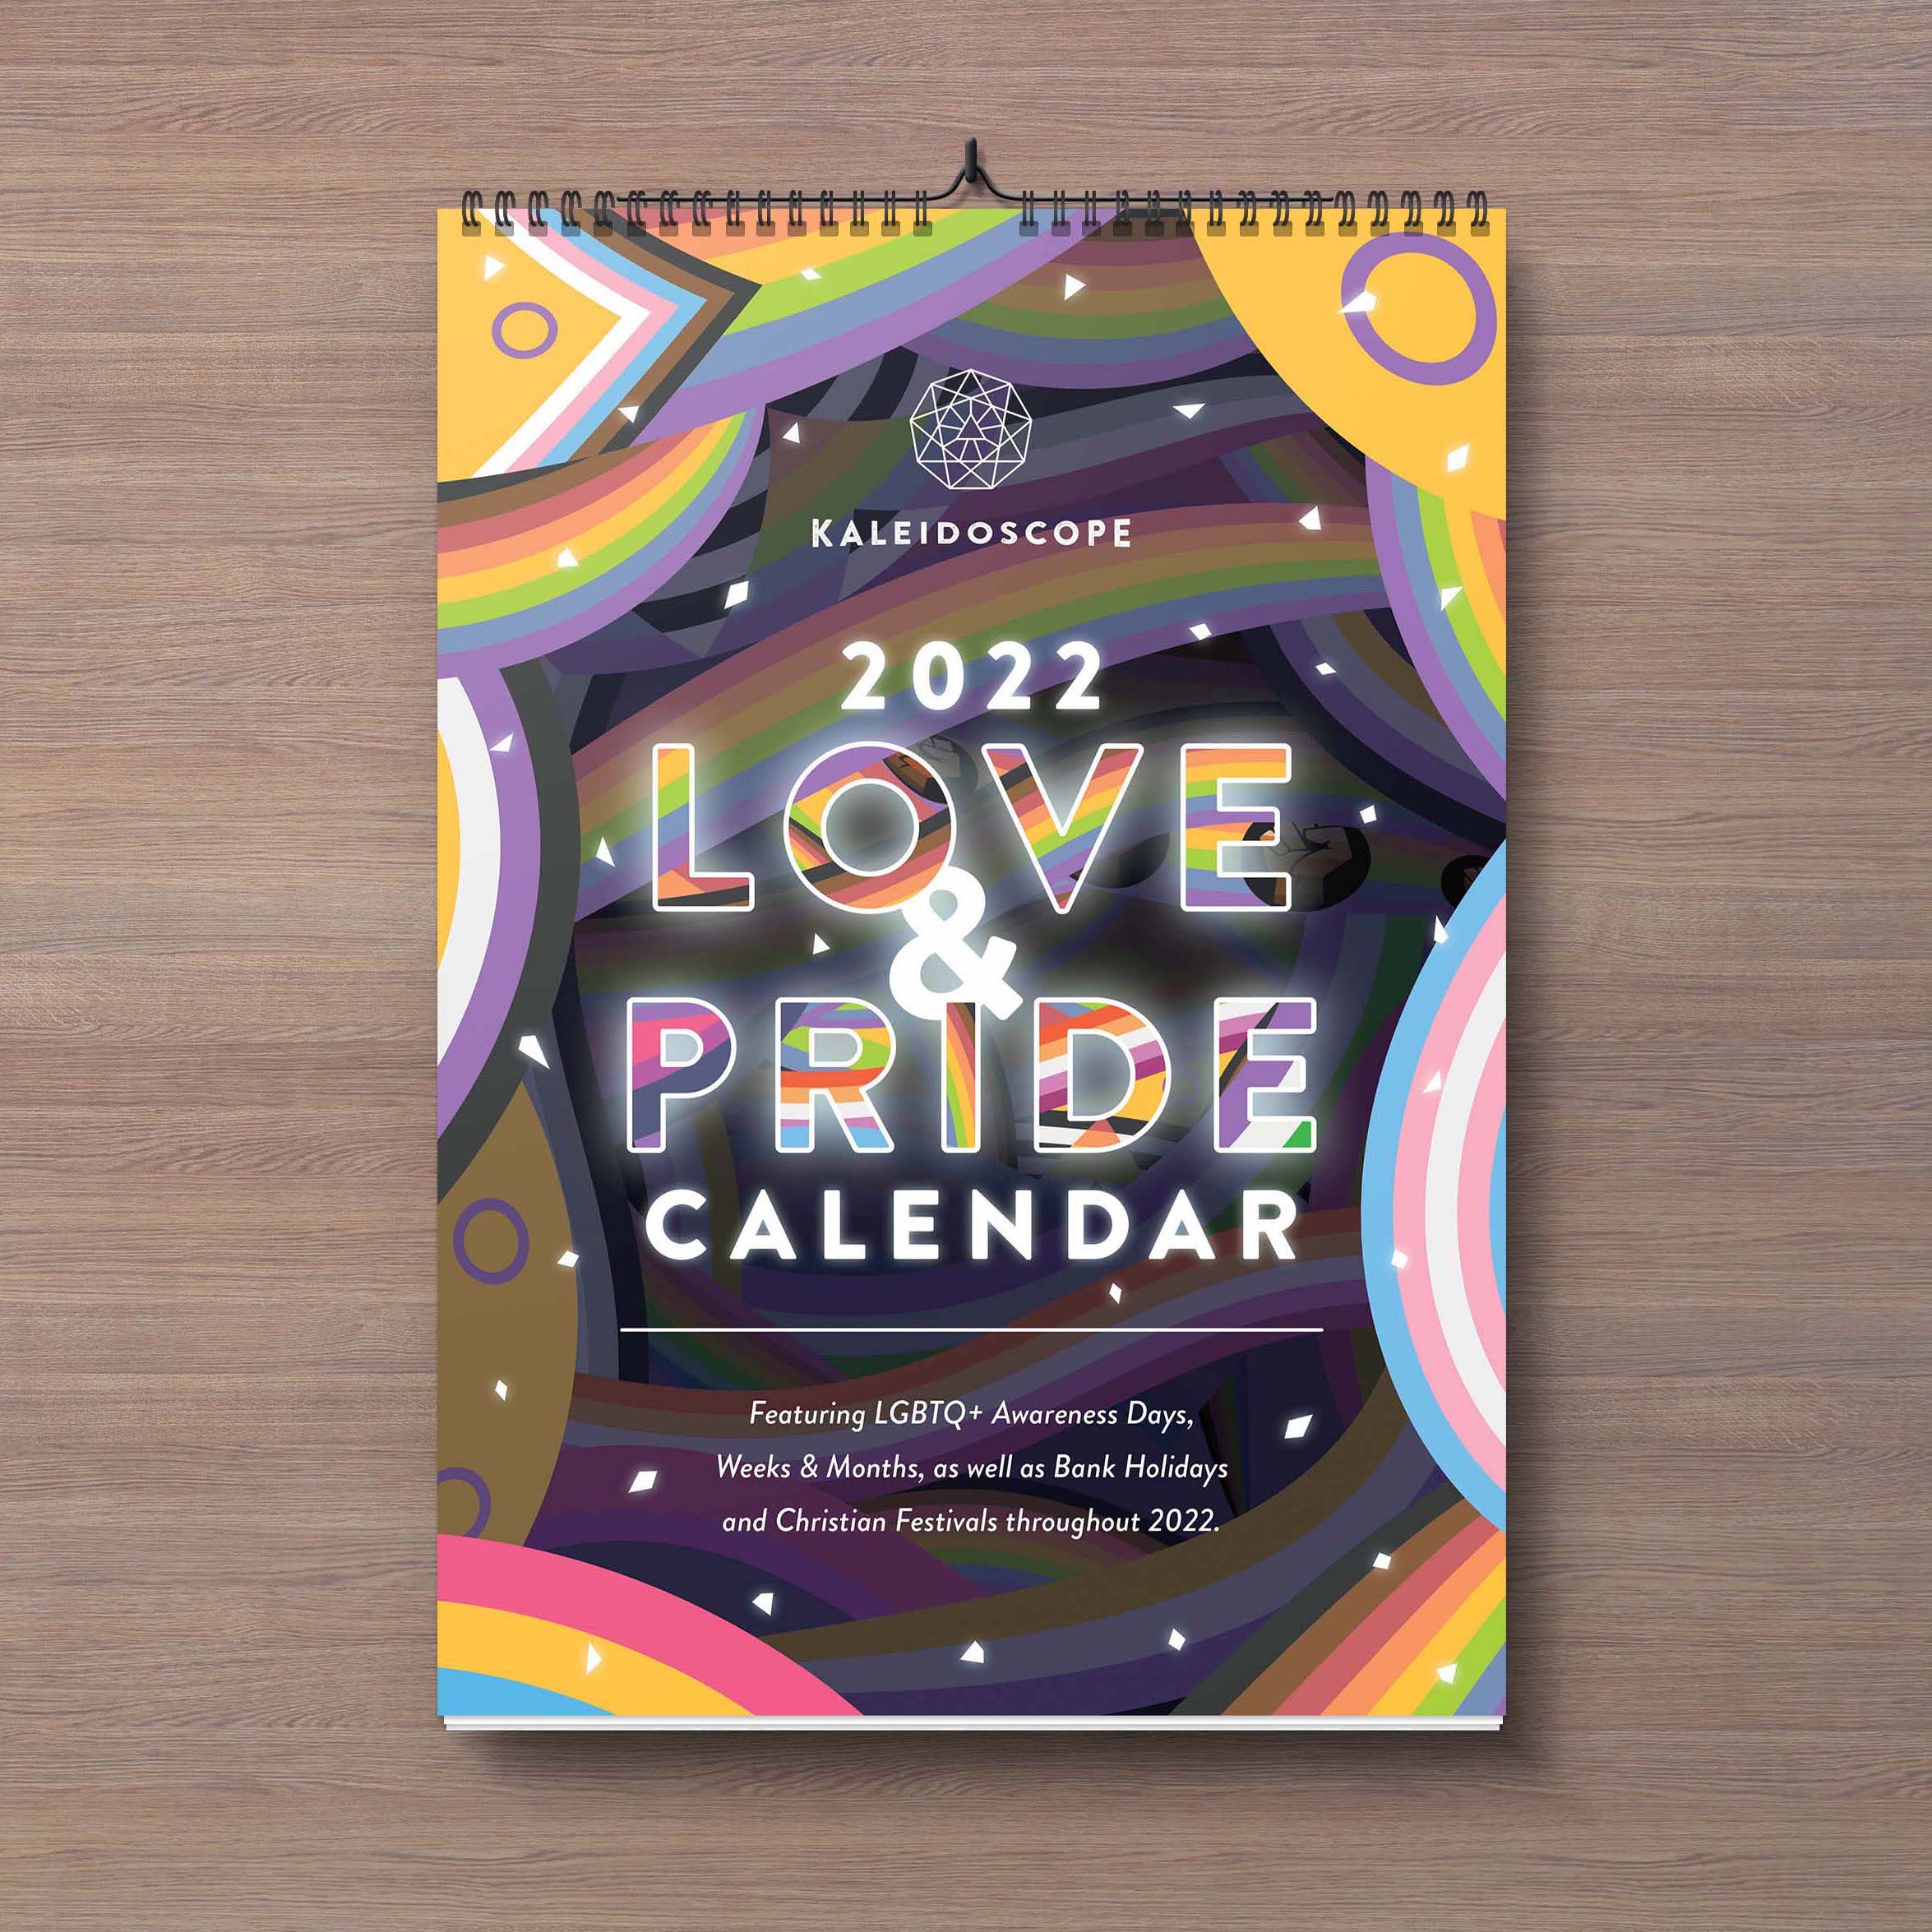 Kaleidoscope’s “Love & Pride” 2022 Calendar